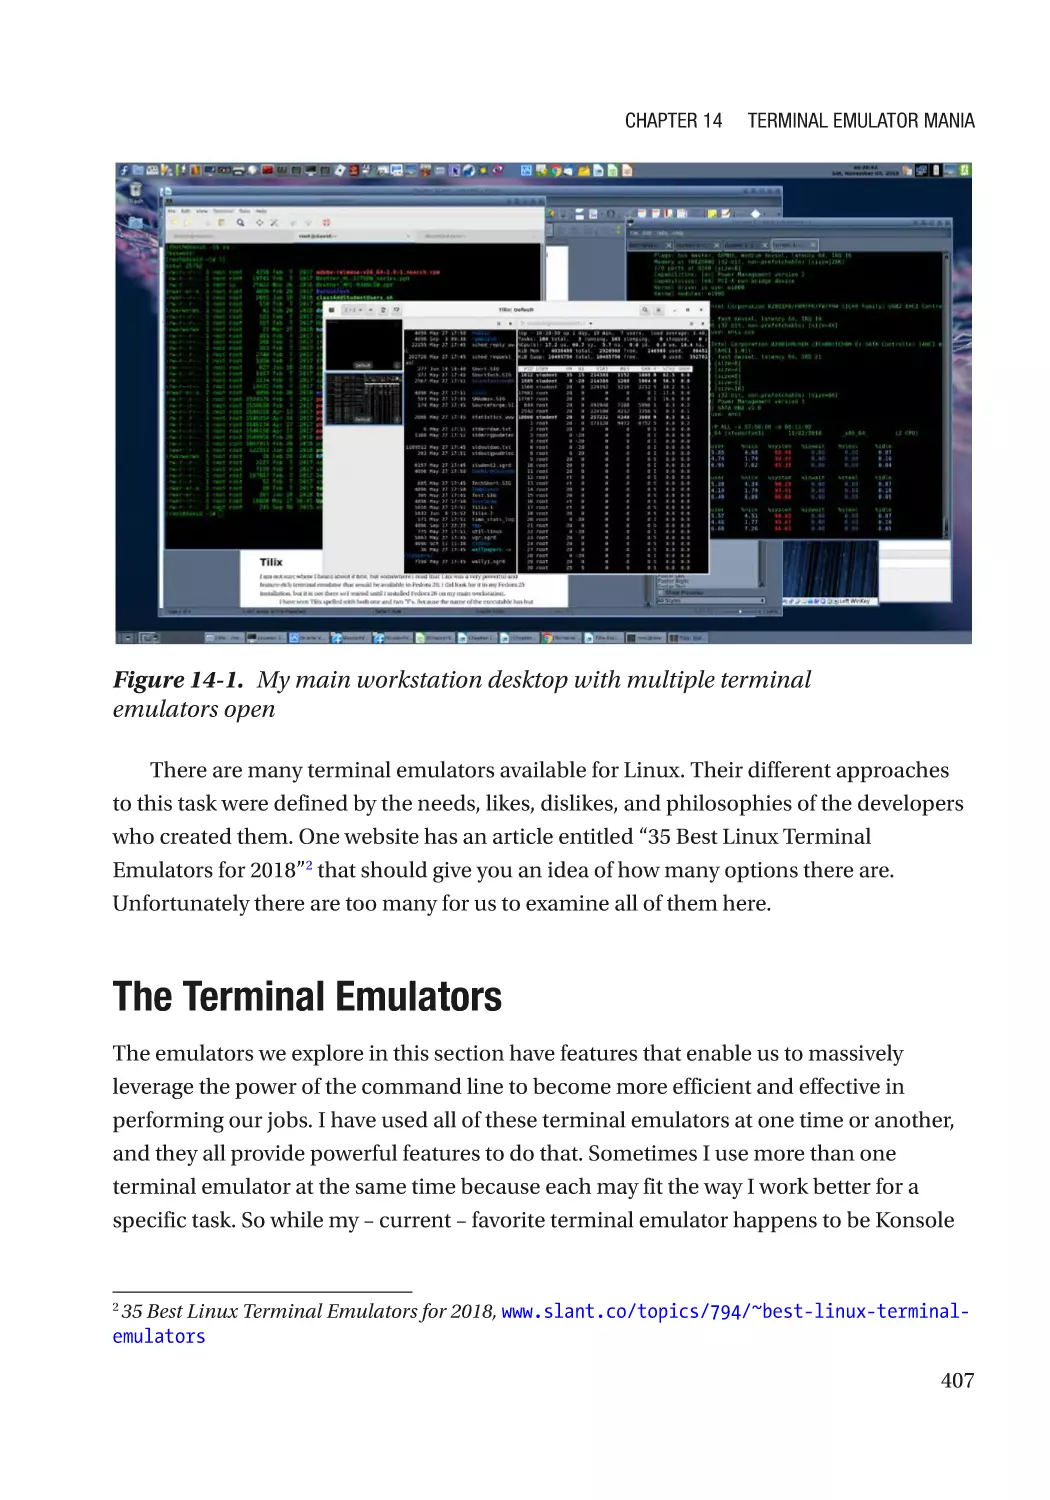 The Terminal Emulators